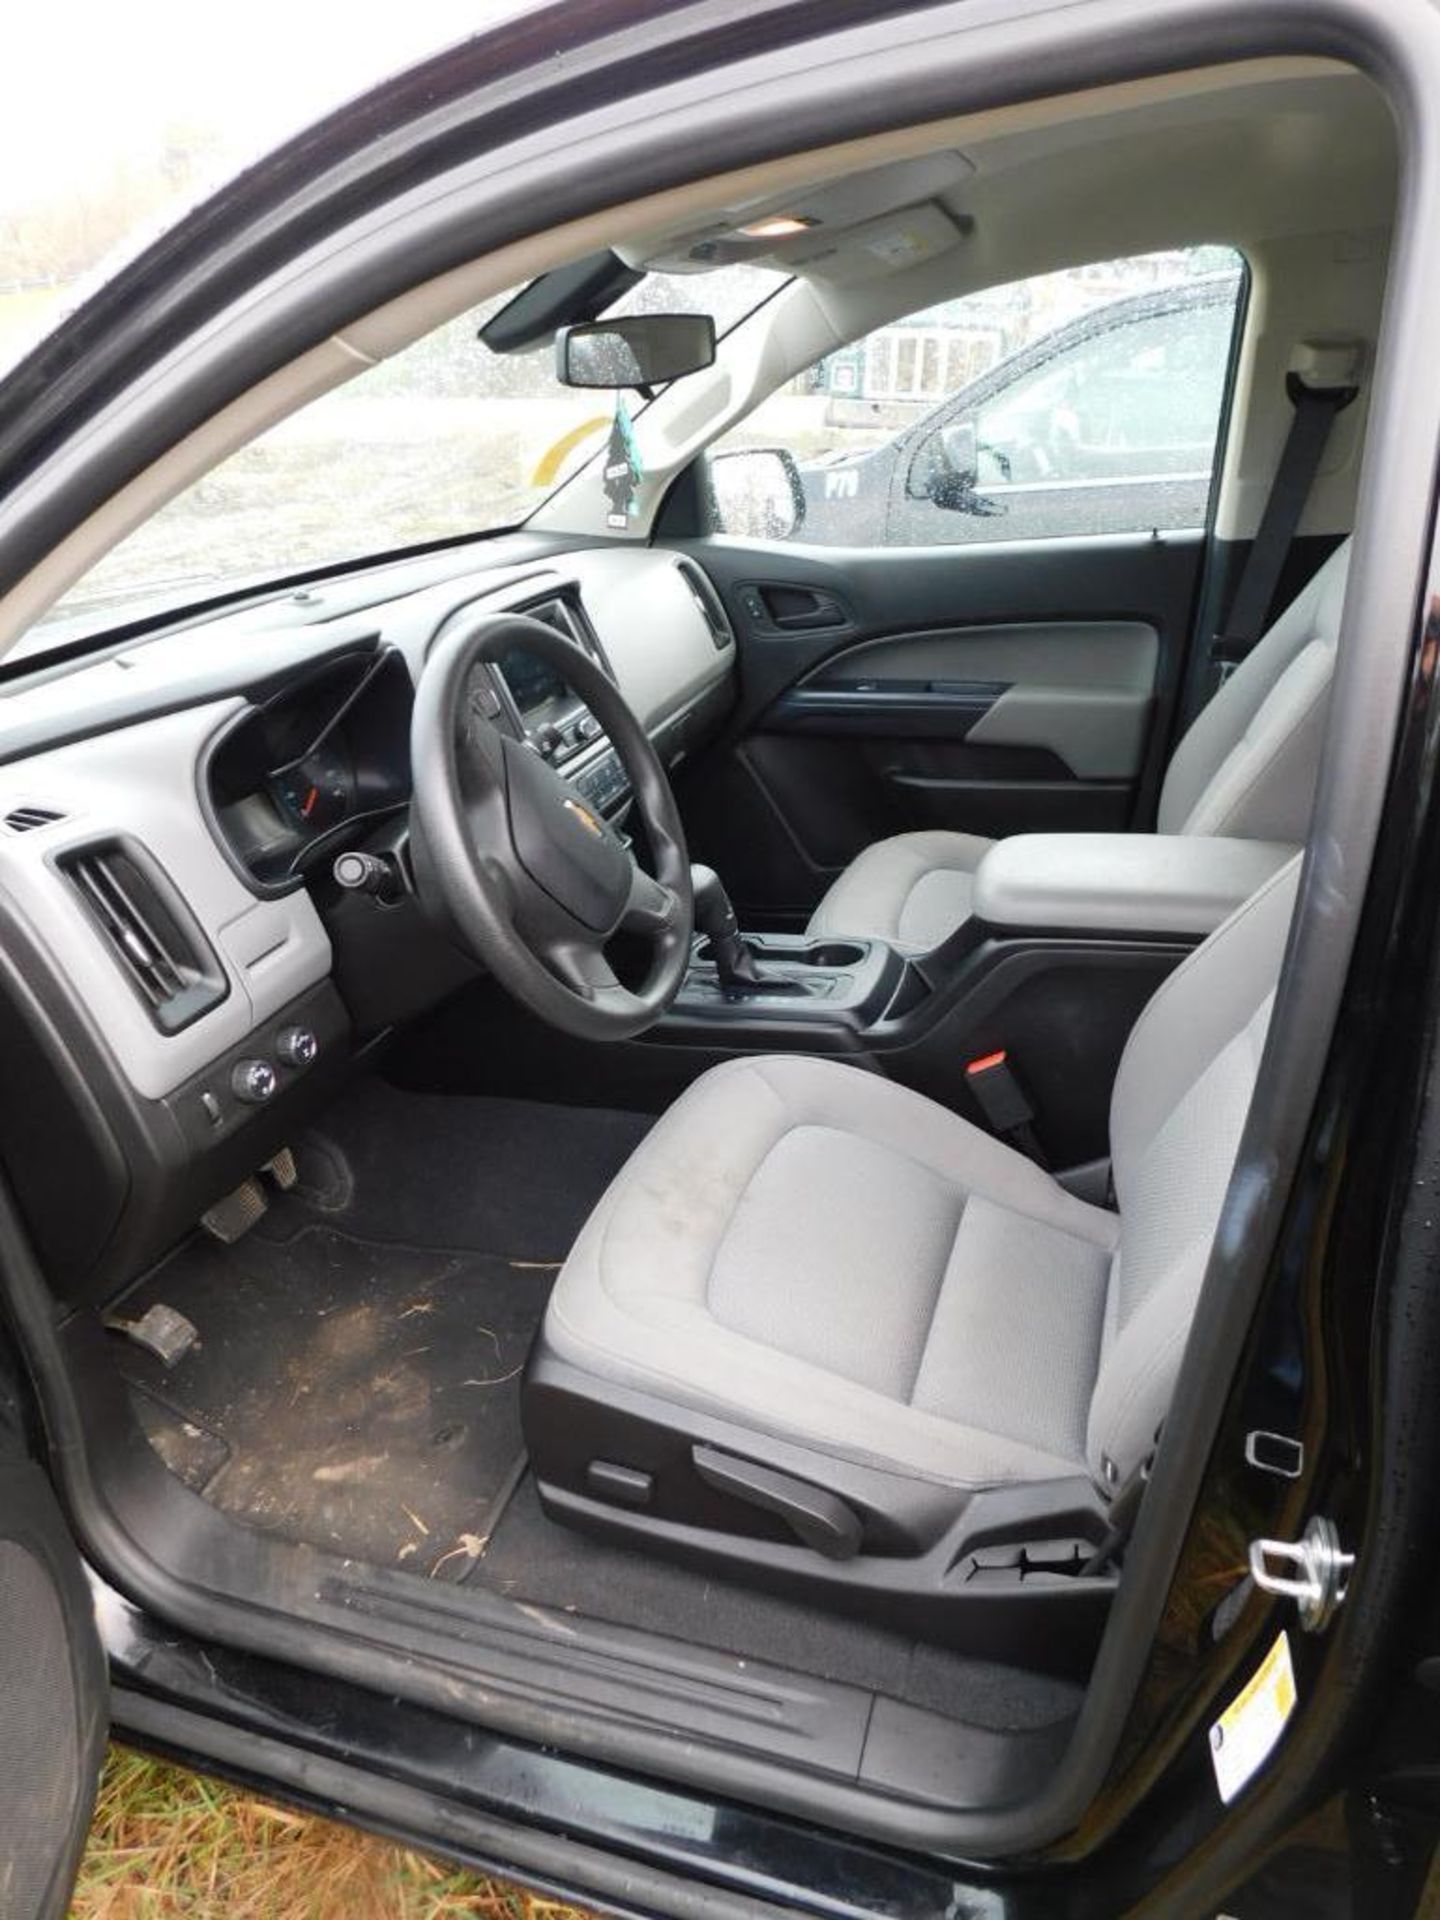 2019 Chevy Colorado Crew Cab, 4-Wheel Drive, 3.6 Liter, V6, Gasoline Motor, Auto, 5' Bed w/Toolbox, - Image 8 of 11